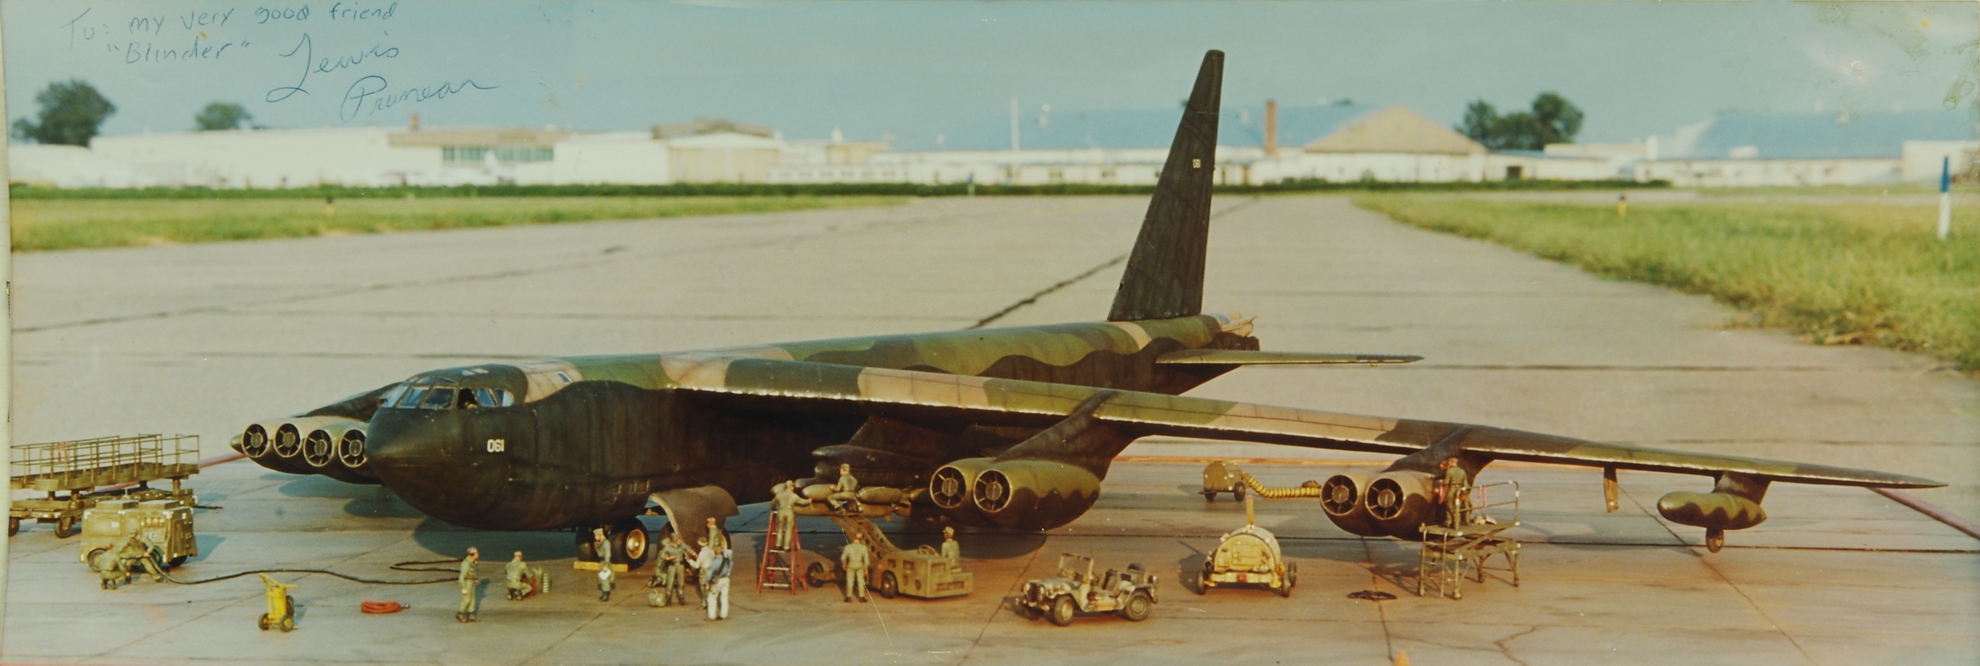 Lewis B-52 diorama copy.jpg